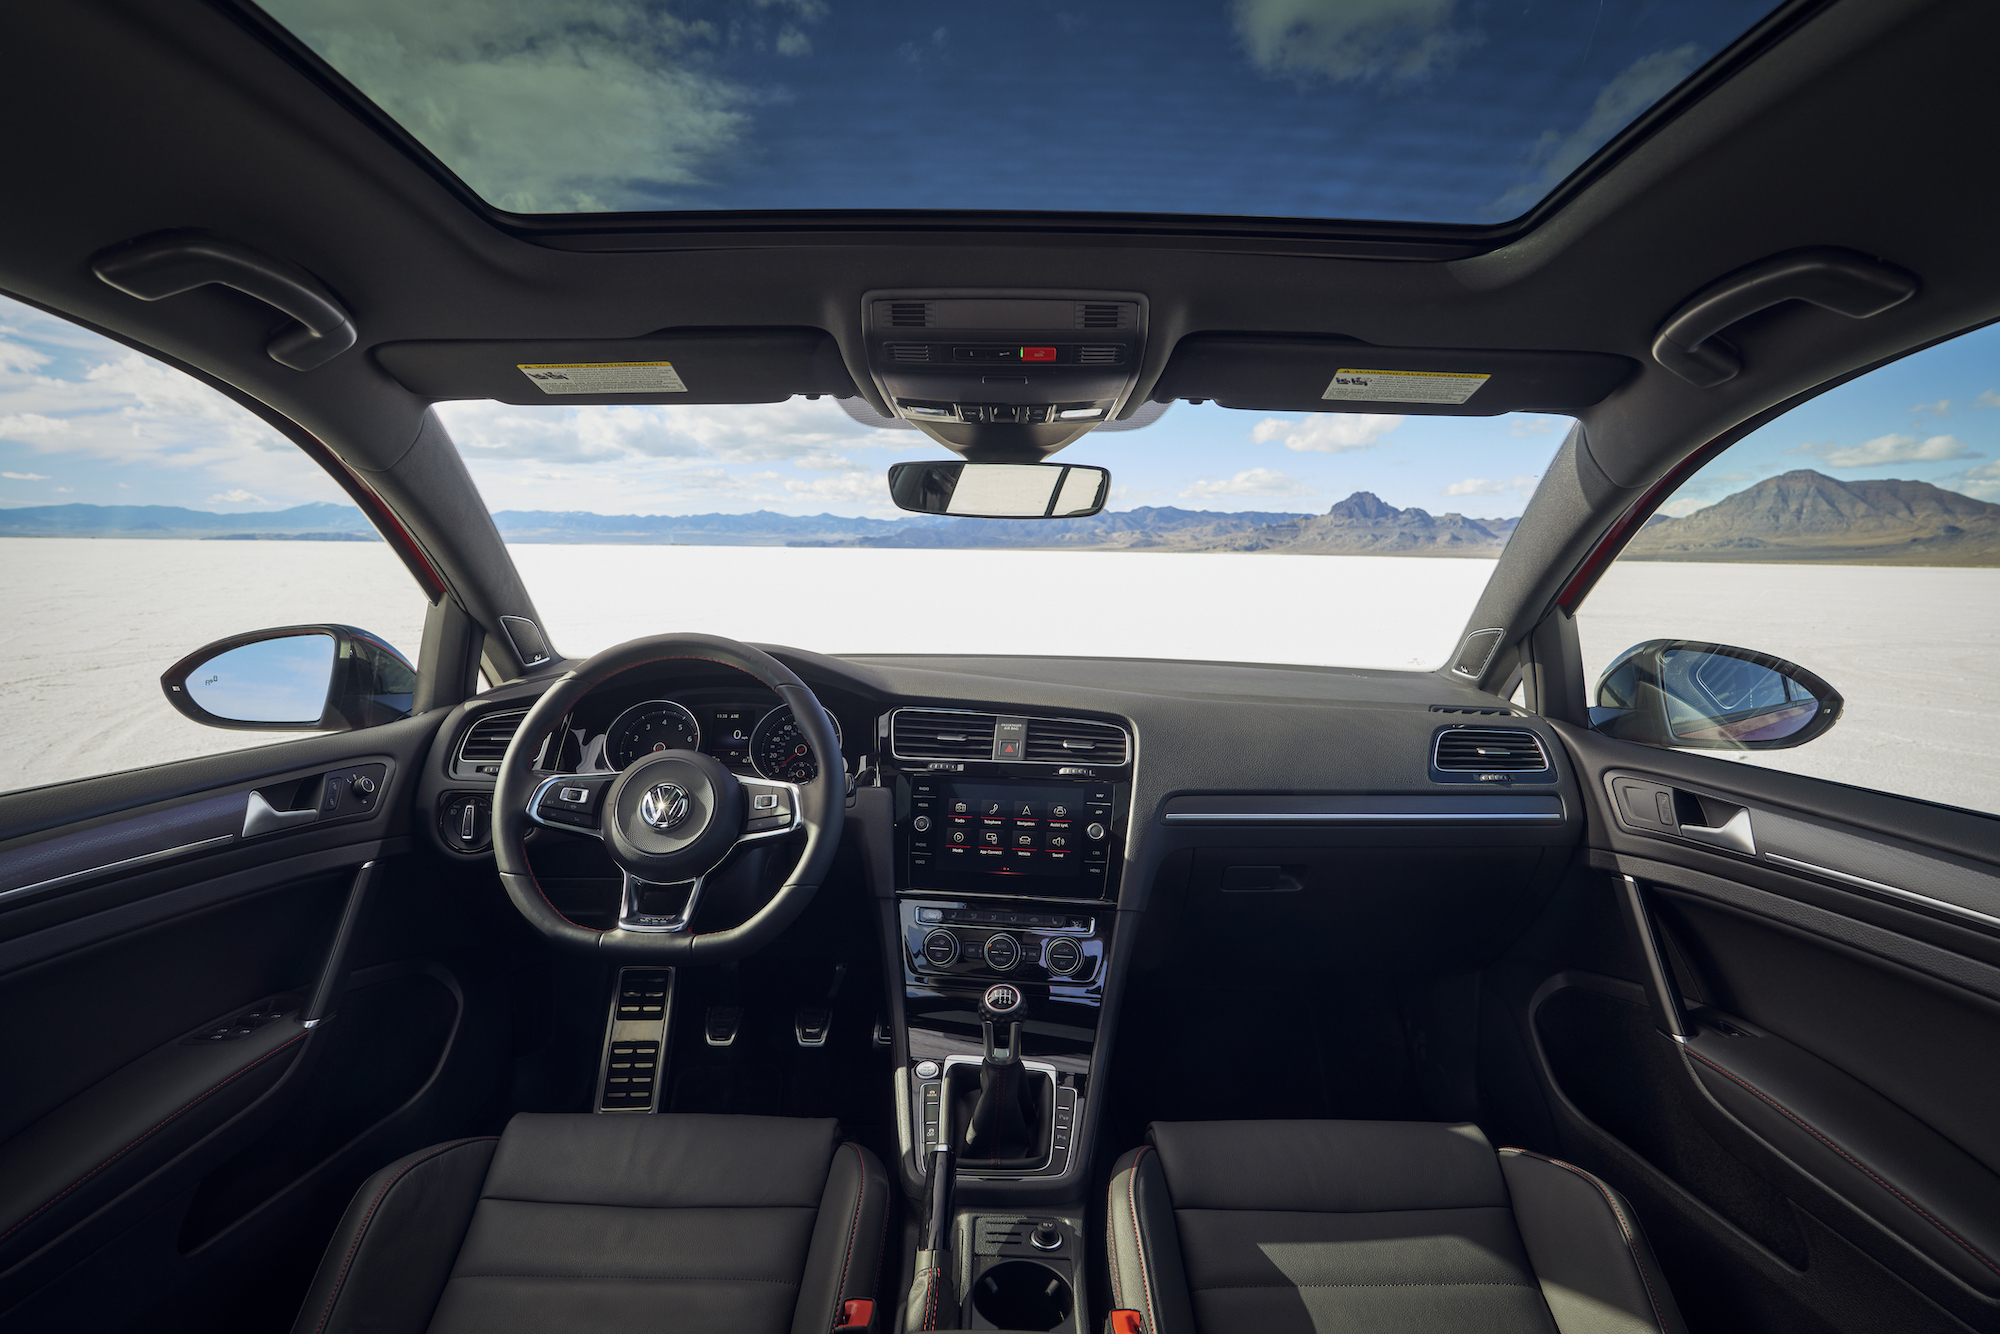 The black interior of a 2021 Volkswagen Golf GTI hatchback parked in a desert